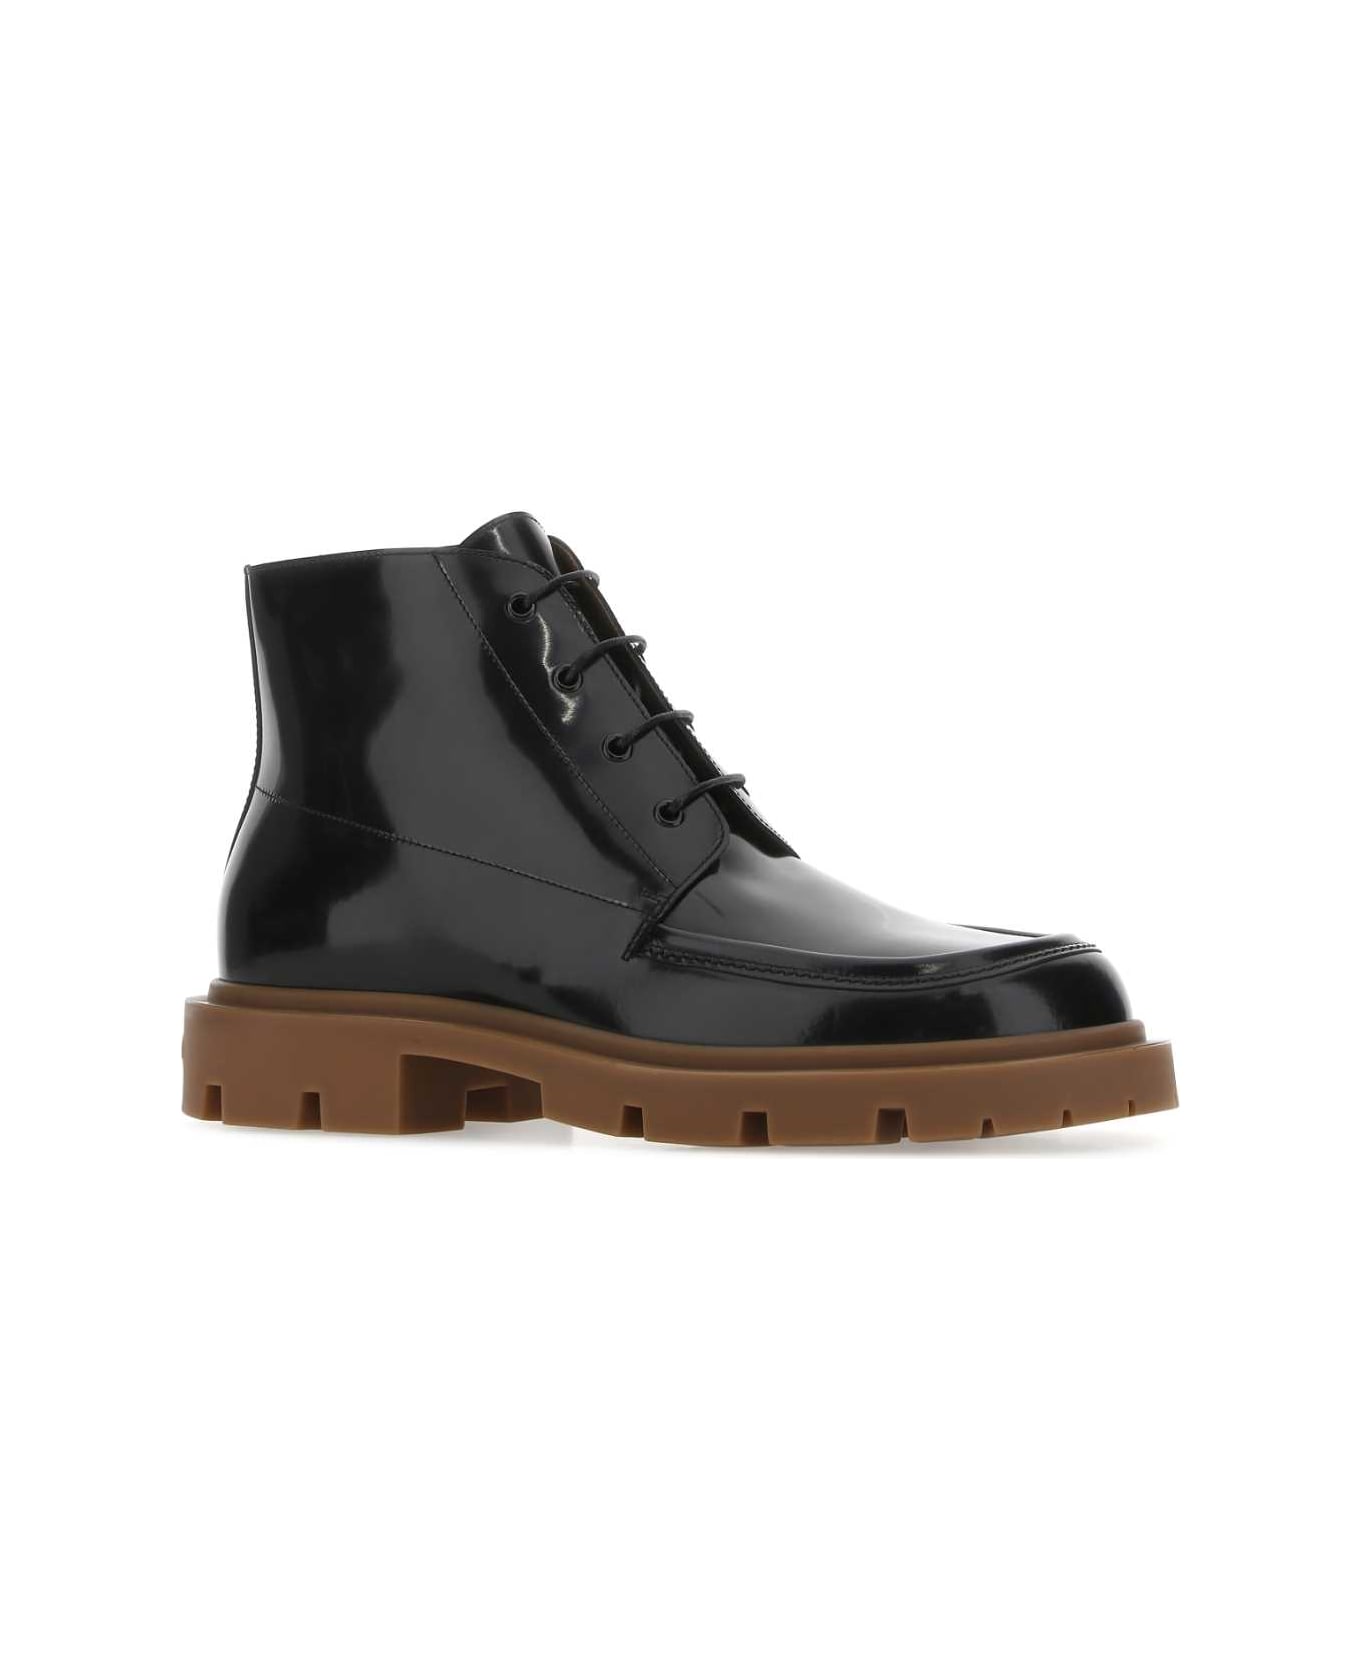 Maison Margiela Black Leather Ankle Boots - H9417